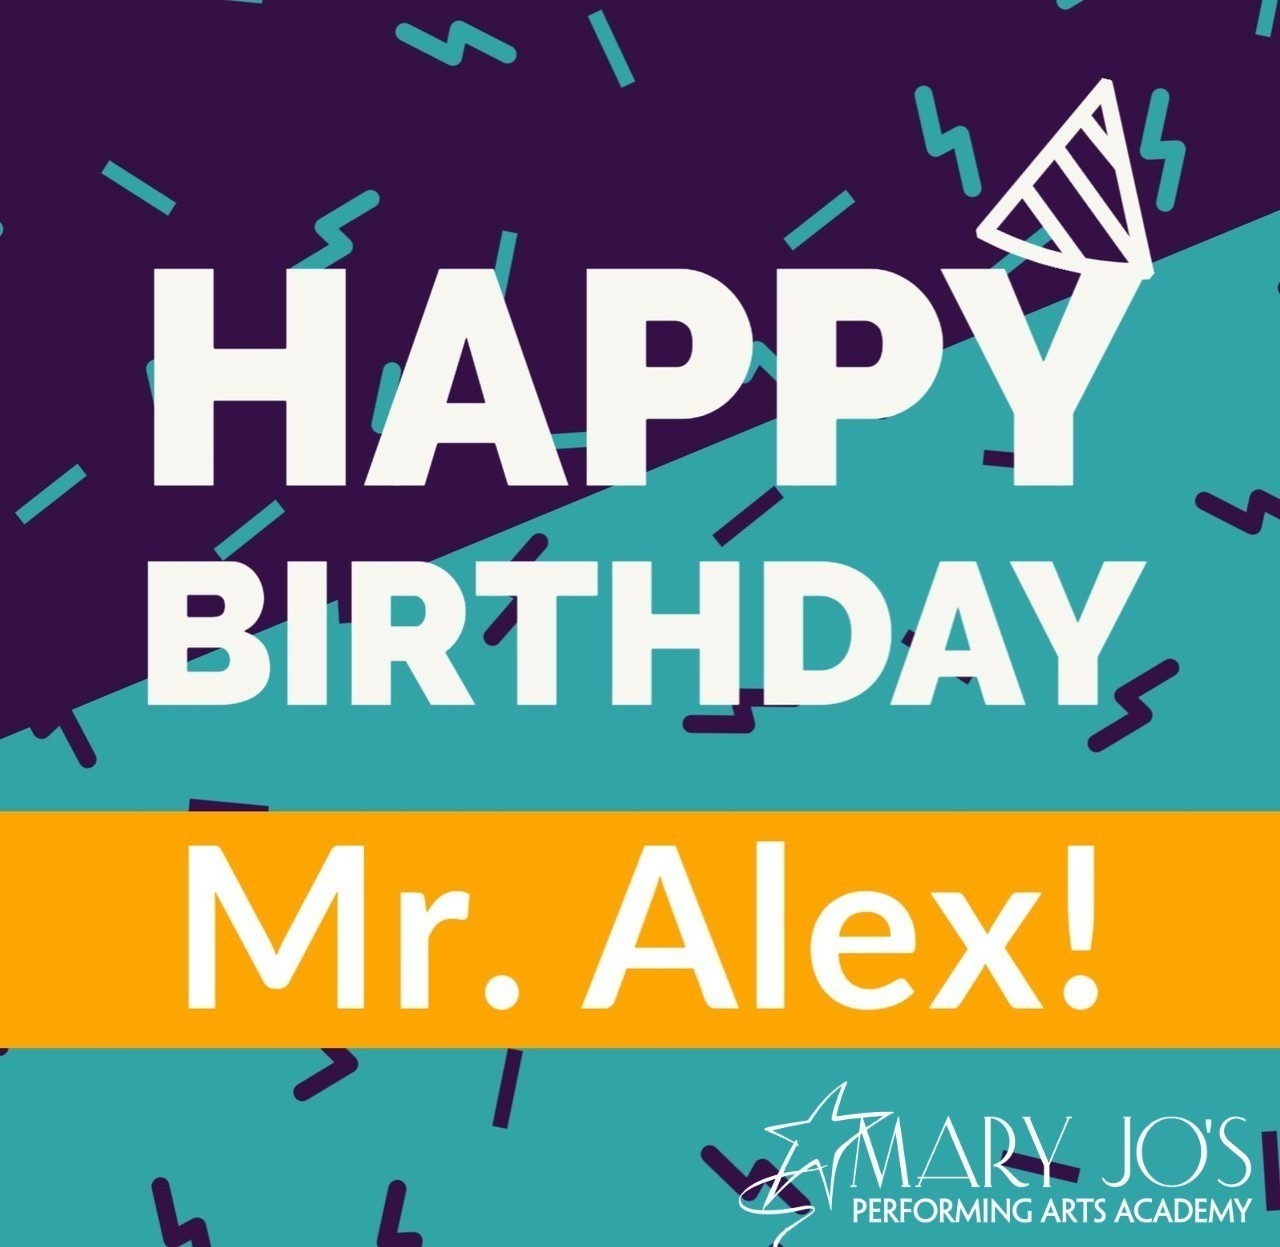 Mary Jo's Academy в Twitter: „Happy Birthday, Mr. Alex! Have a great day!! • • #MJPAA #HappyBirthday #Celebrate https://t.co/wf94UCugPT“ / Twitter